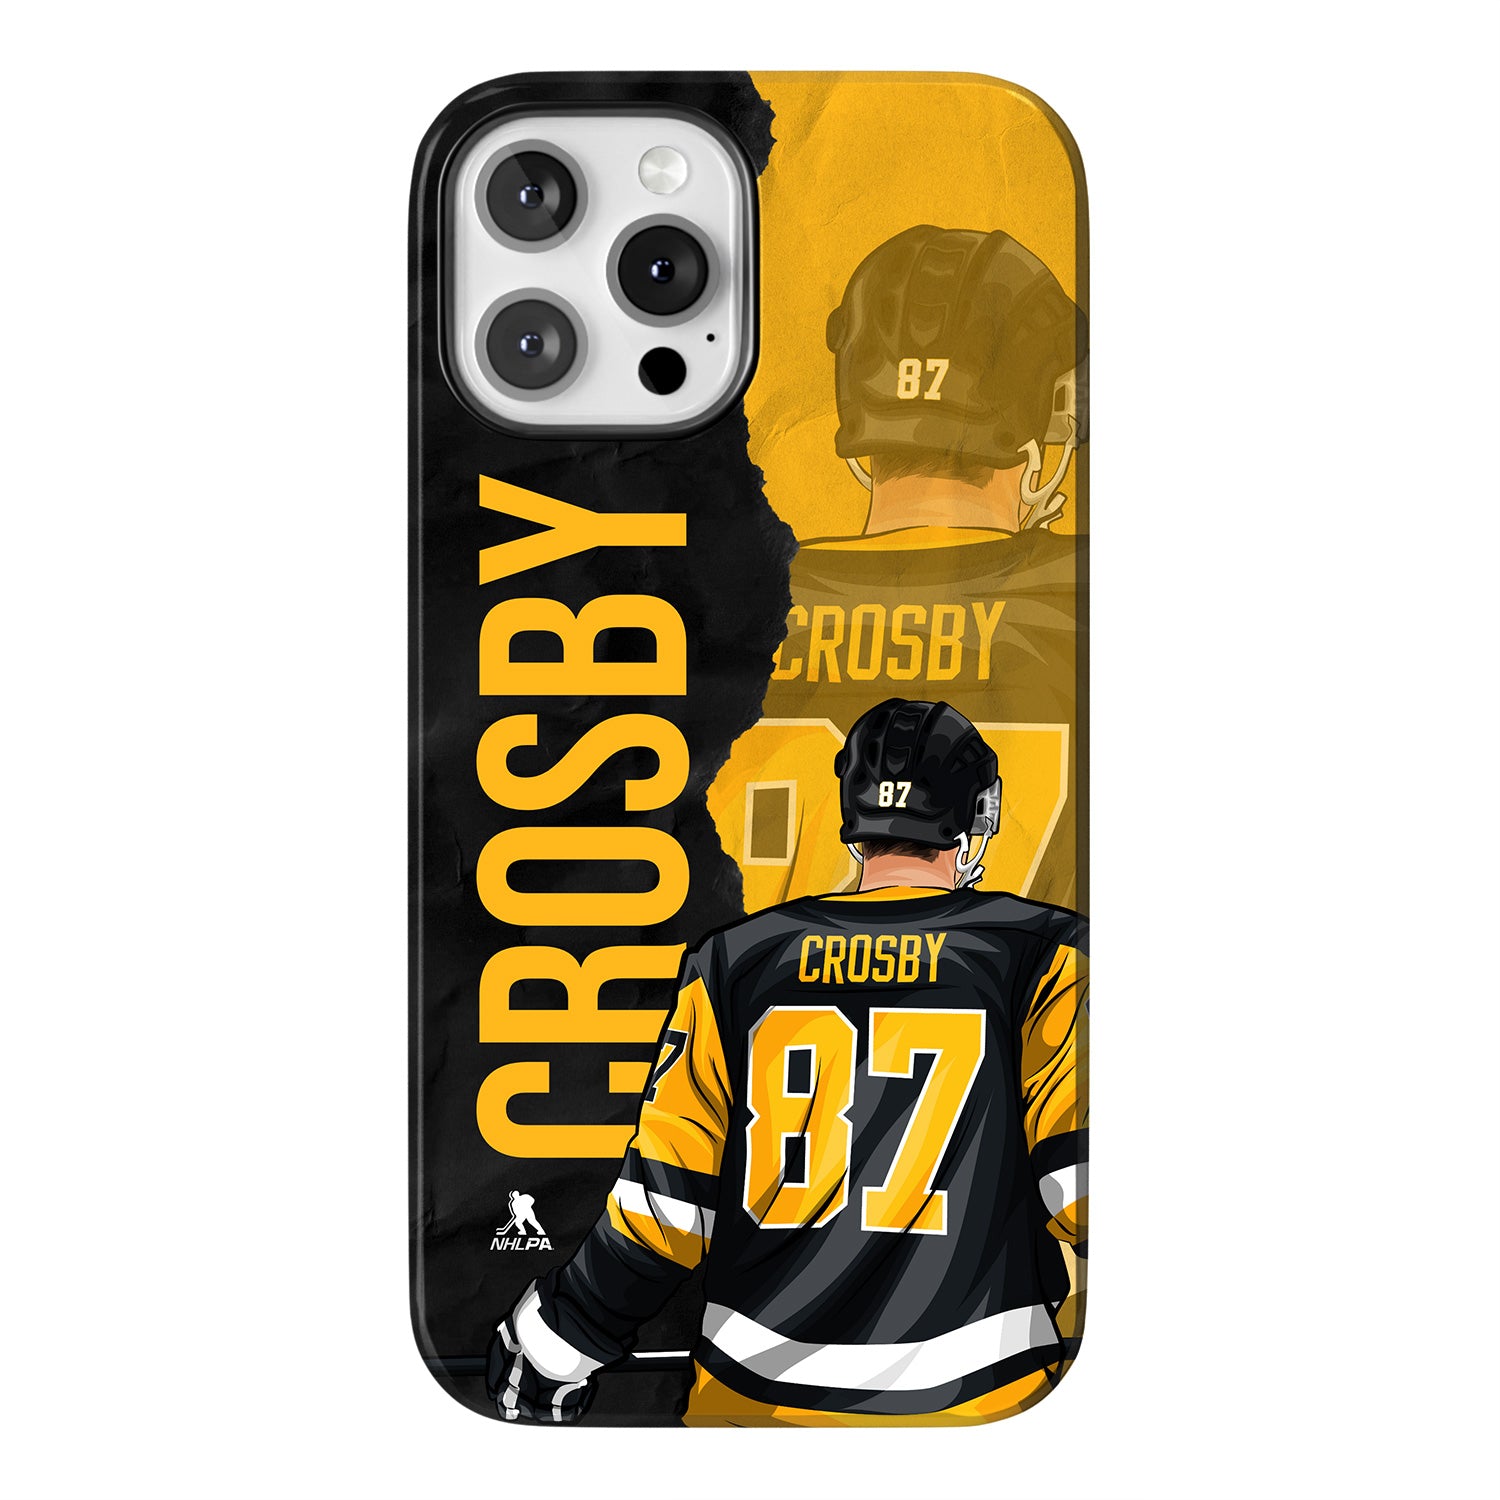 Crosby Star Series 3.0 Phone Case